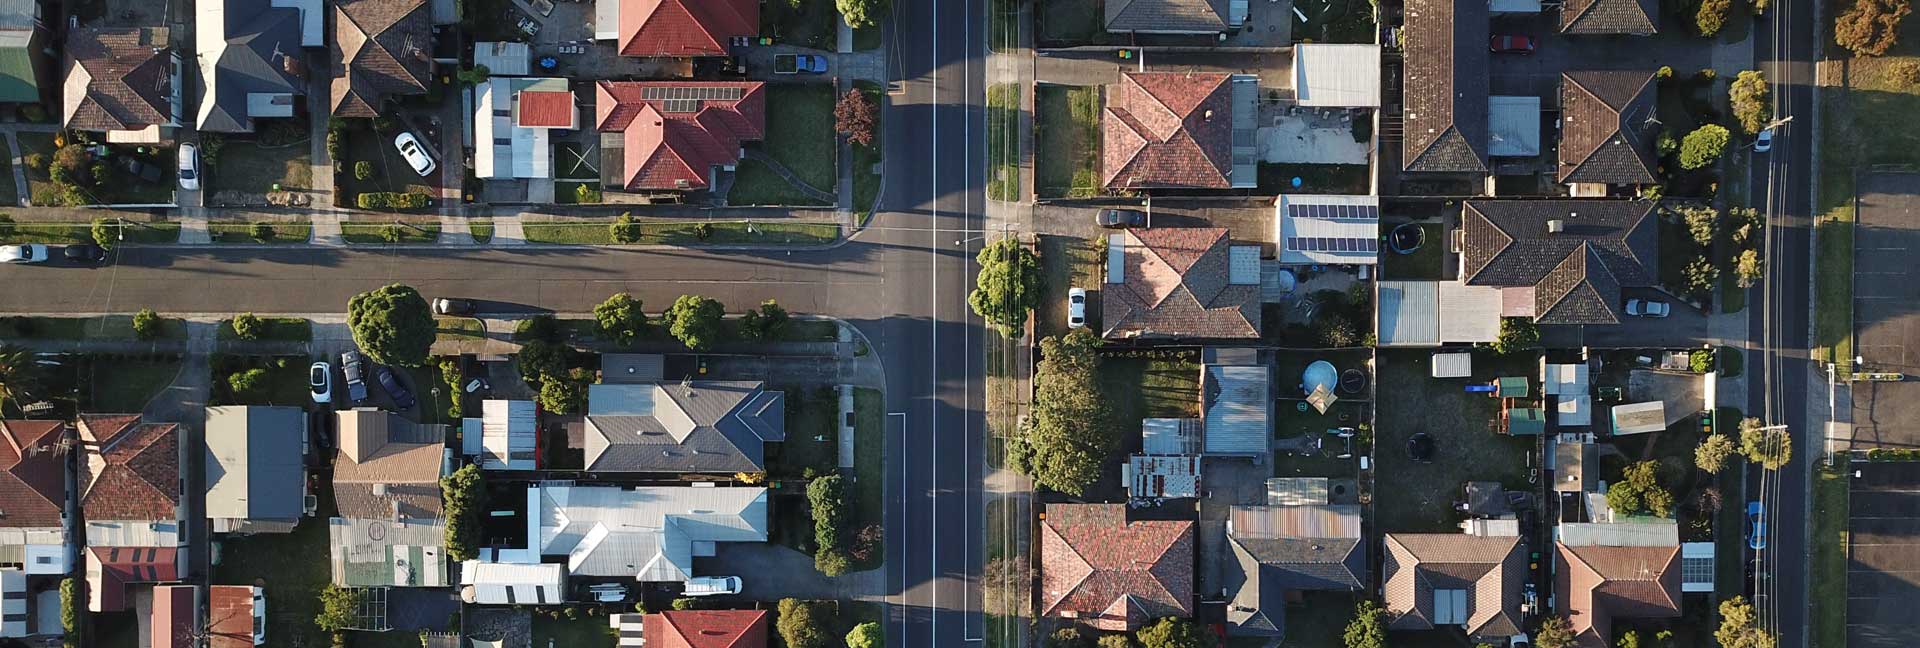 overhead aerial view of residential neighbourhood